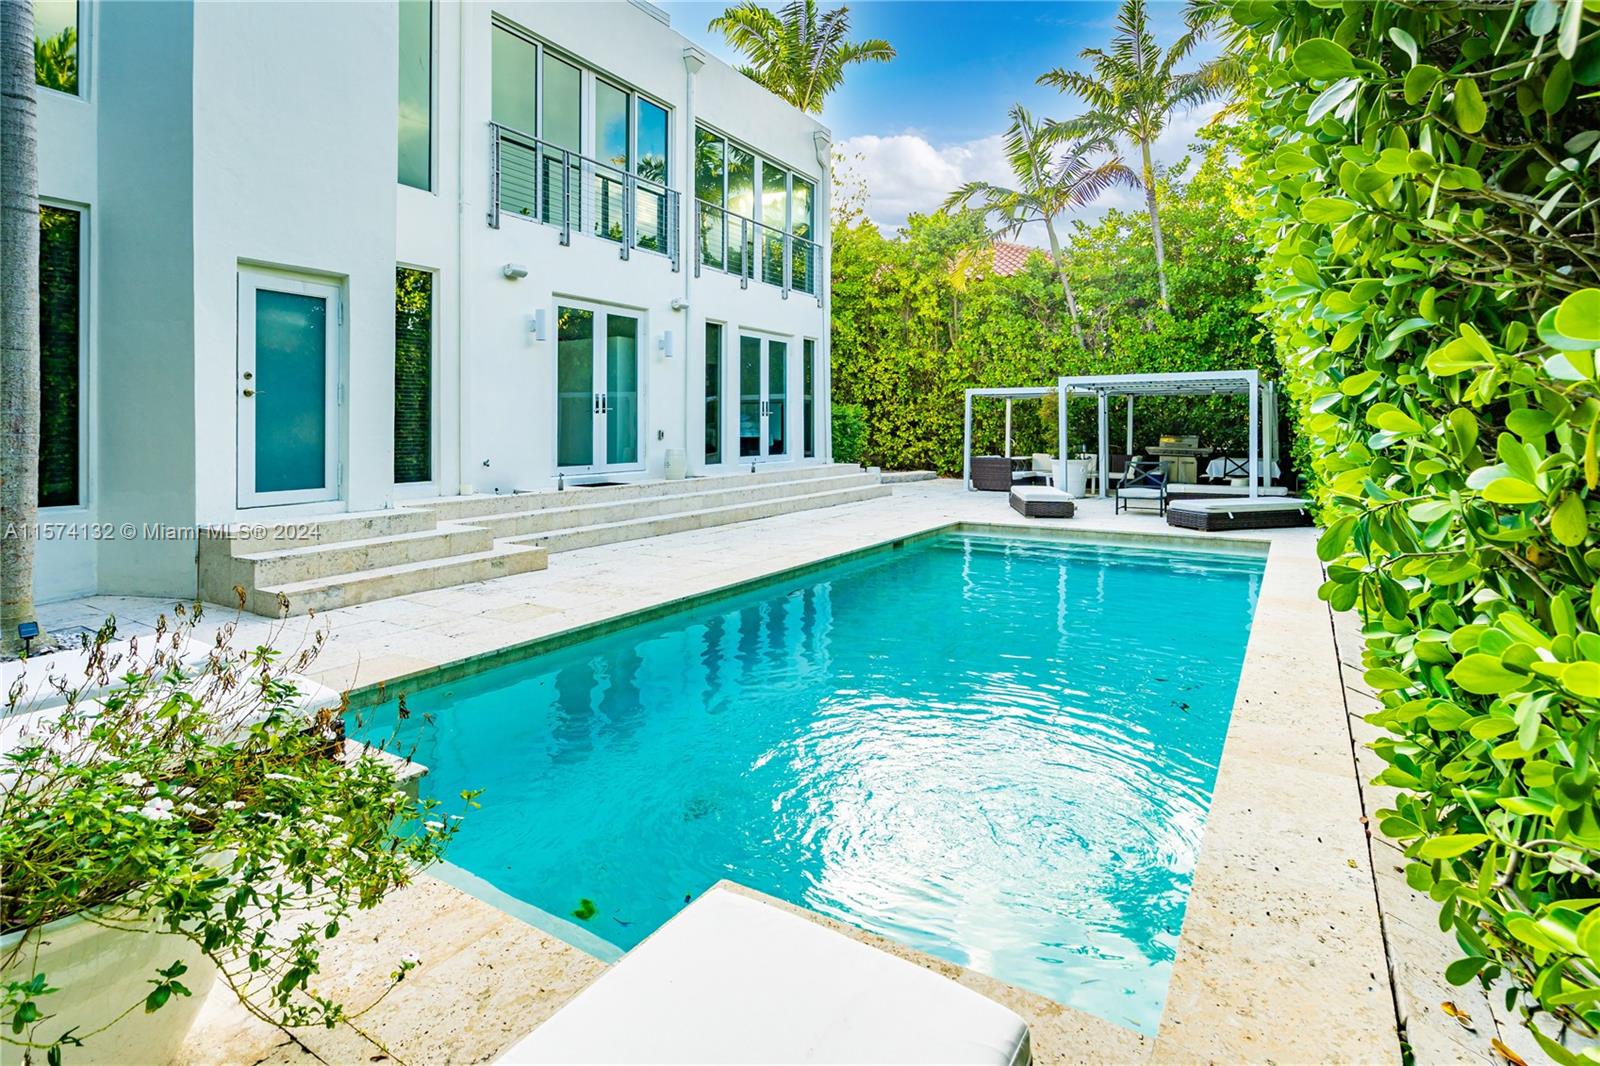 Rental Property at 765 Harbor Dr, Key Biscayne, Miami-Dade County, Florida - Bedrooms: 5 
Bathrooms: 4  - $25,000 MO.